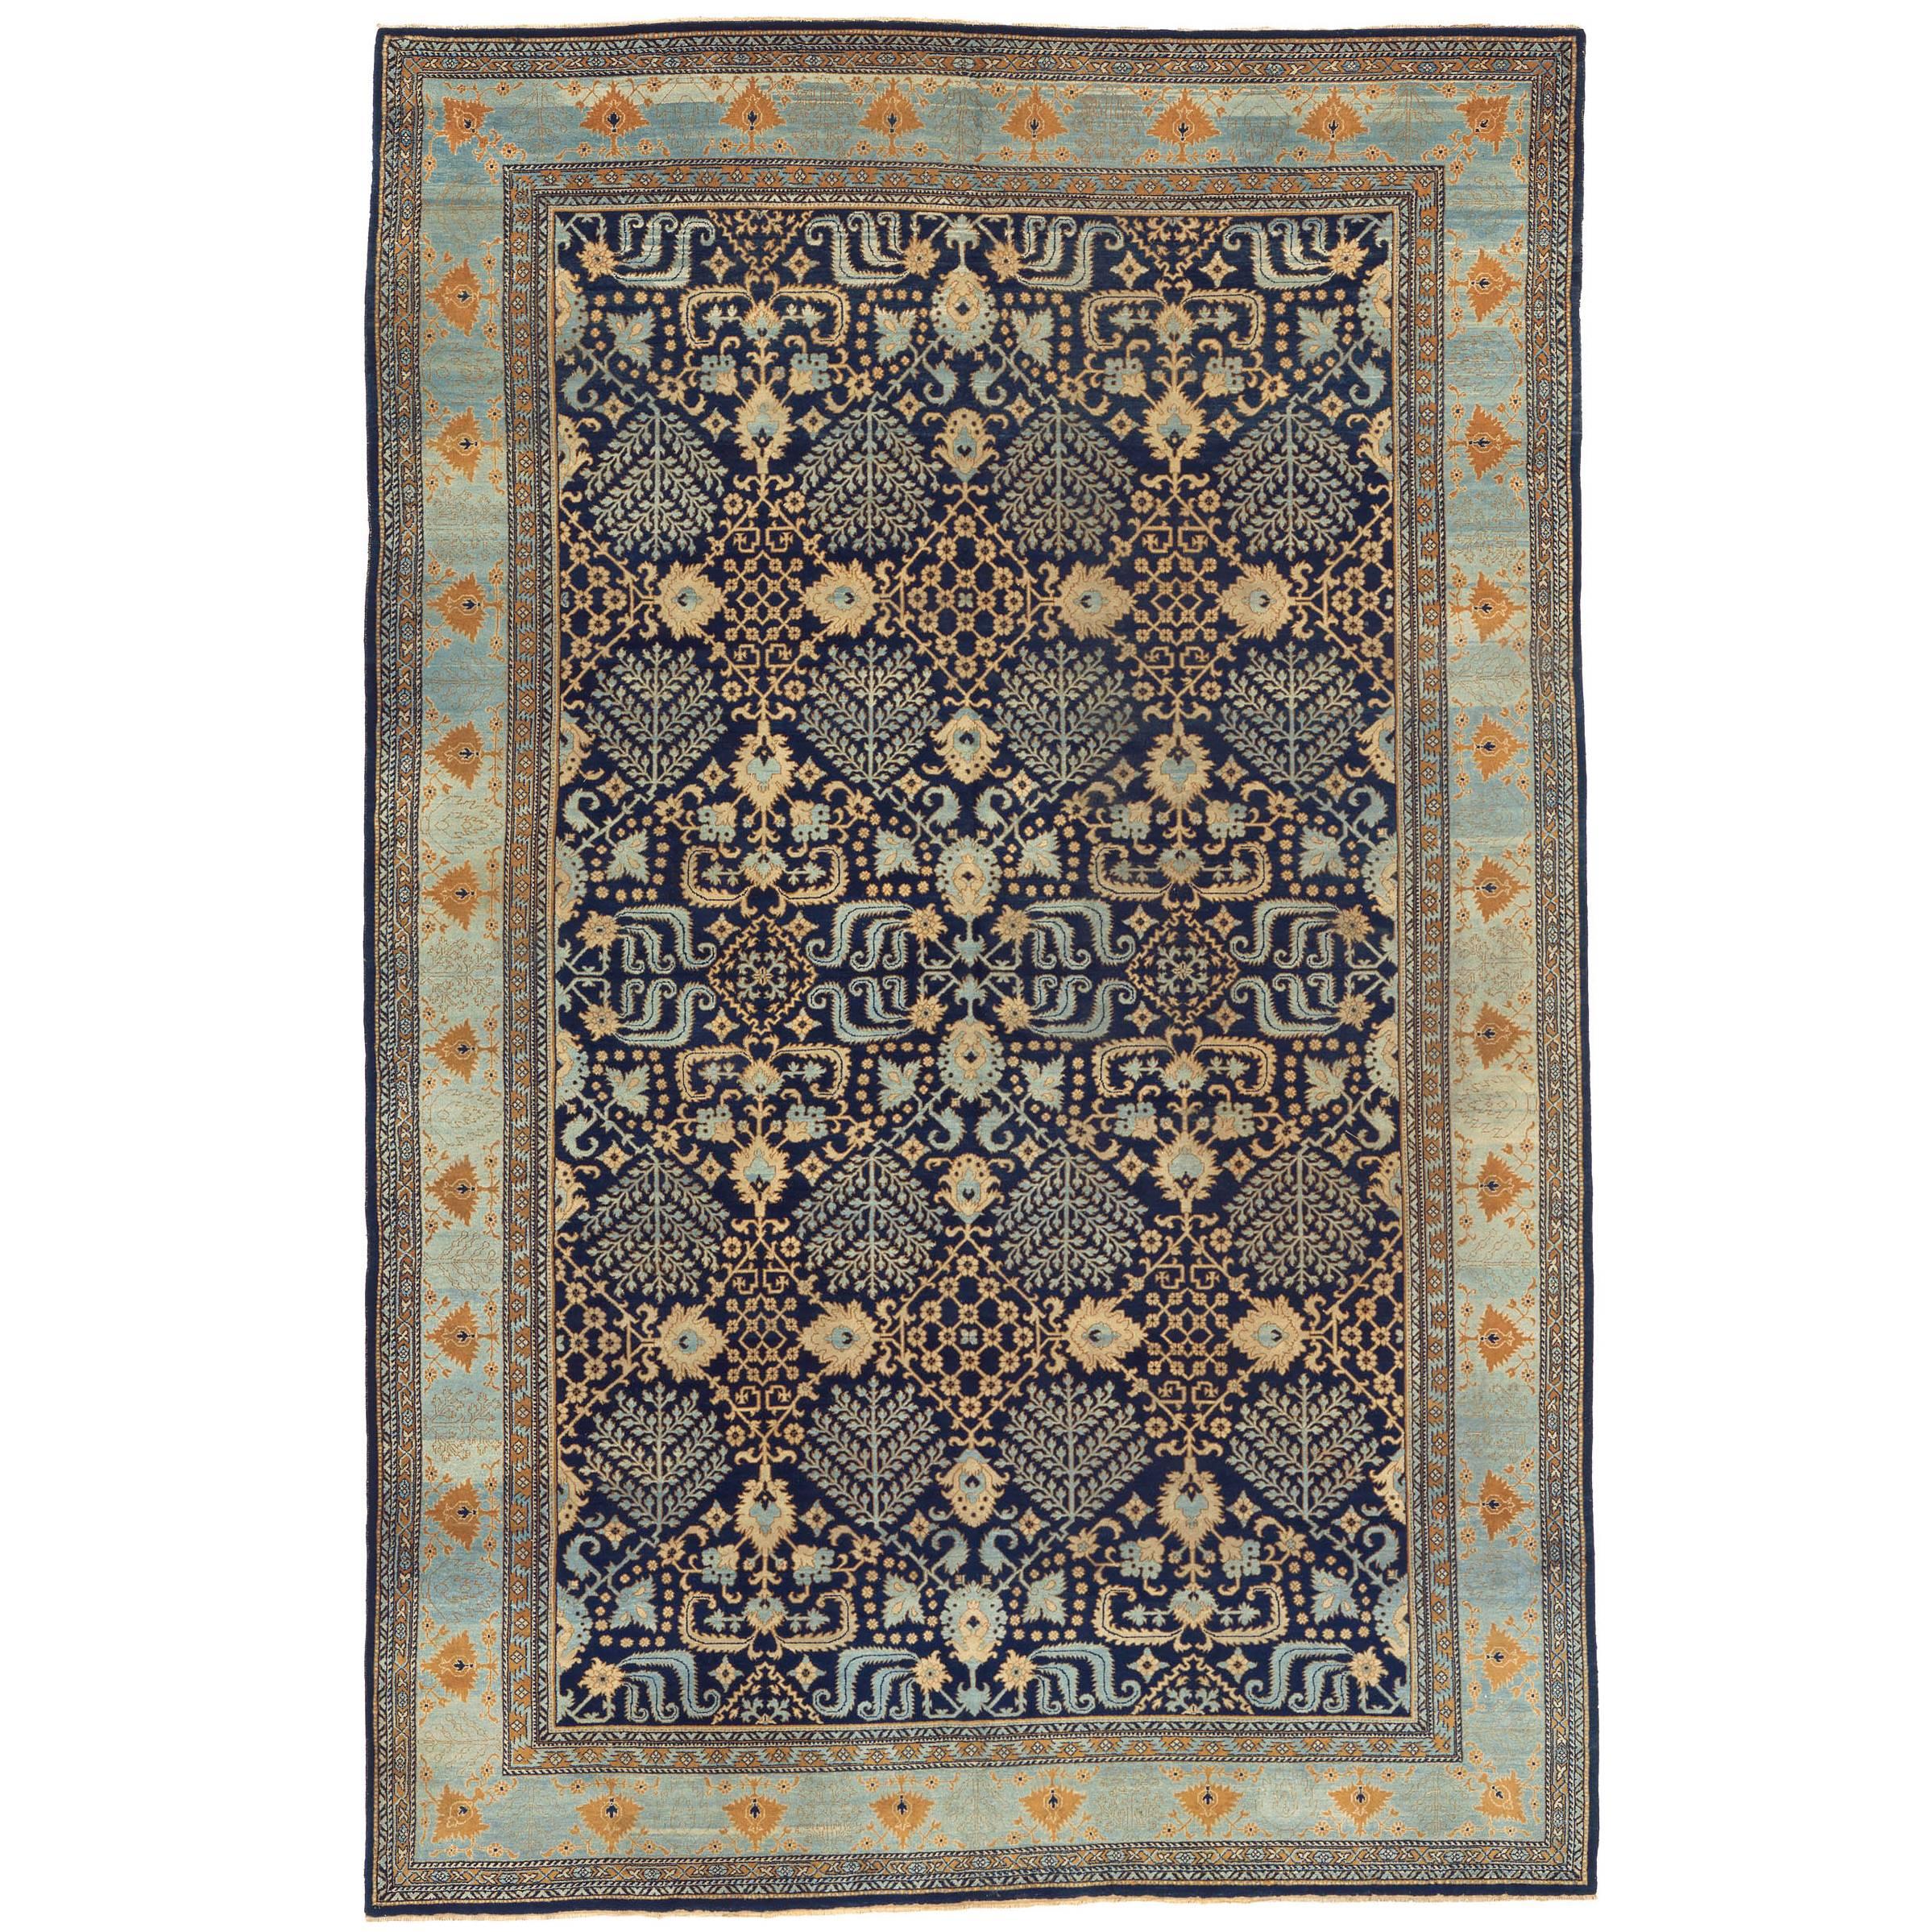 Early 20th Century Agra Carpet